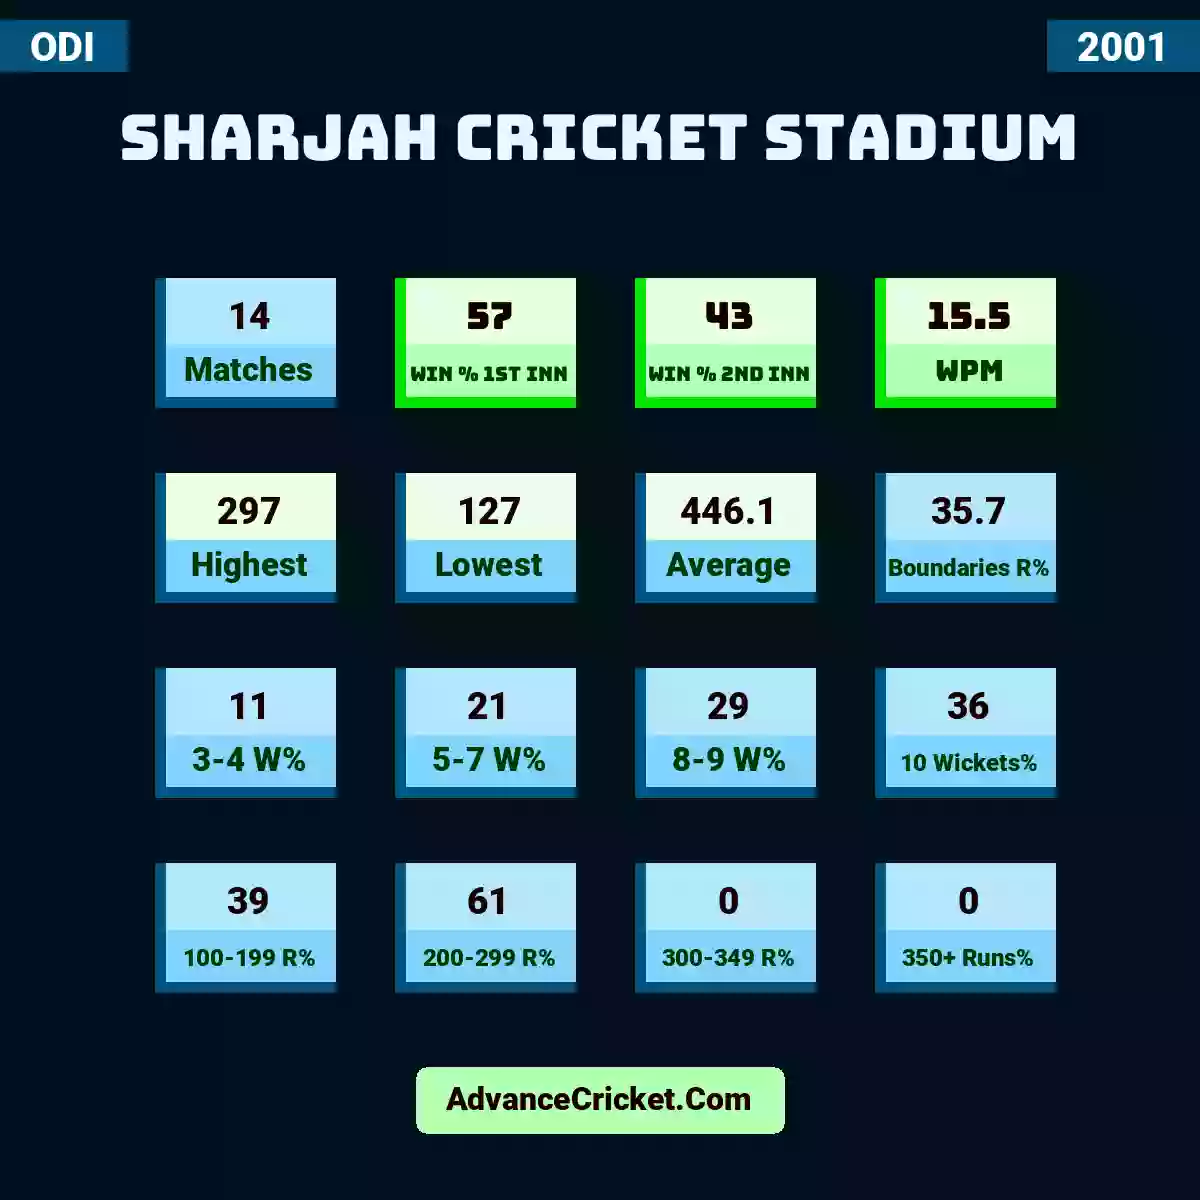 Image showing Sharjah Cricket Stadium with Matches: 14, Win % 1st Inn: 57, Win % 2nd Inn: 43, WPM: 15.5, Highest: 297, Lowest: 127, Average: 446.1, Boundaries R%: 35.7, 3-4 W%: 11, 5-7 W%: 21, 8-9 W%: 29, 10 Wickets%: 36, 100-199 R%: 39, 200-299 R%: 61, 300-349 R%: 0, 350+ Runs%: 0.